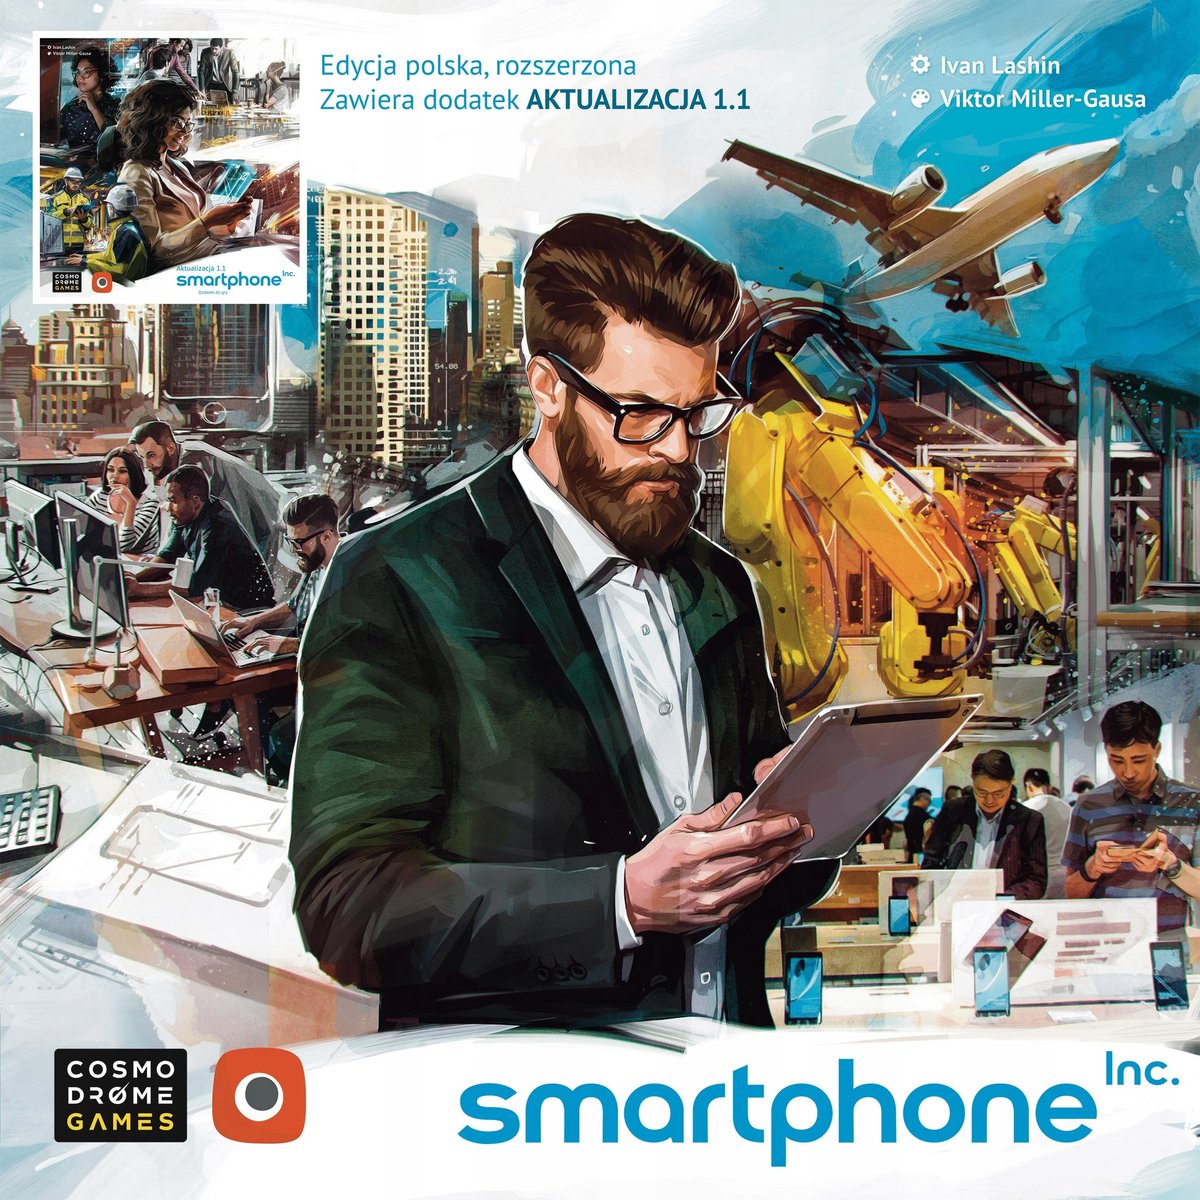 Smartphone Inc, gra ekonomiczna, Portal Games